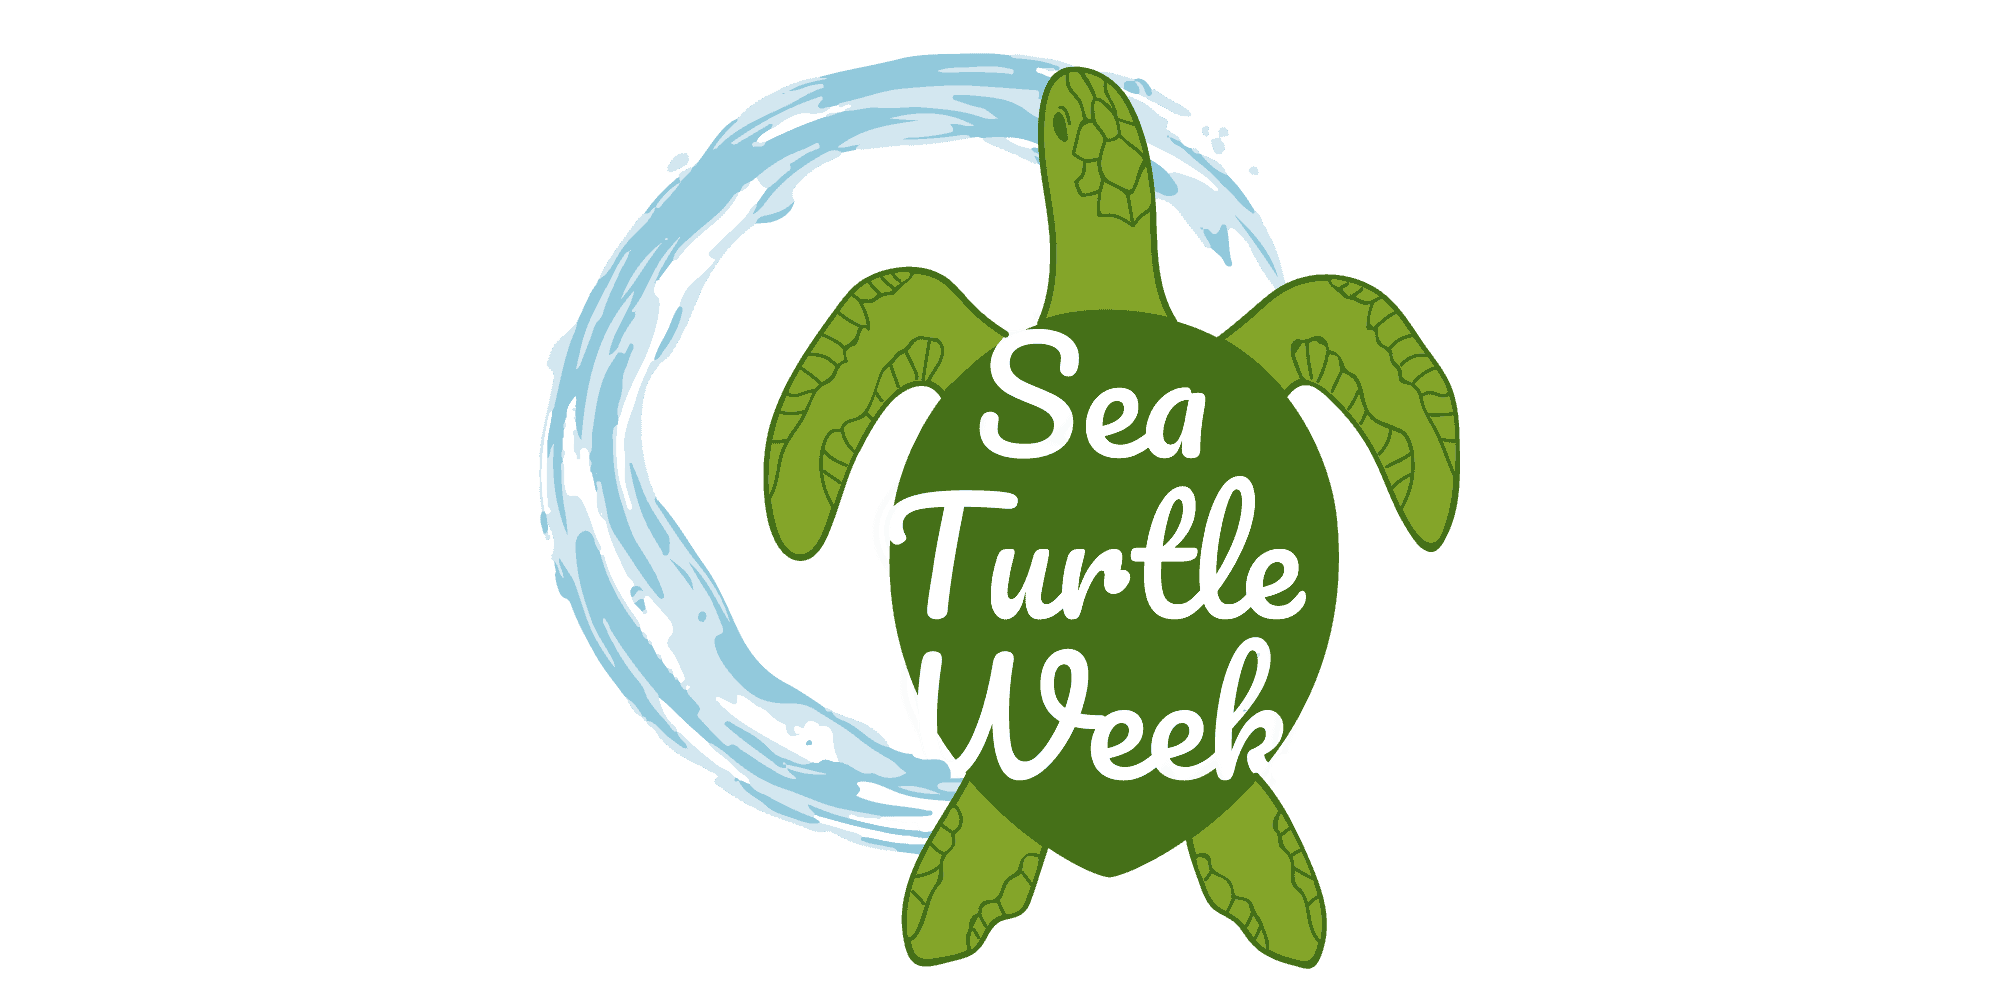 Sea Turtle Week logo